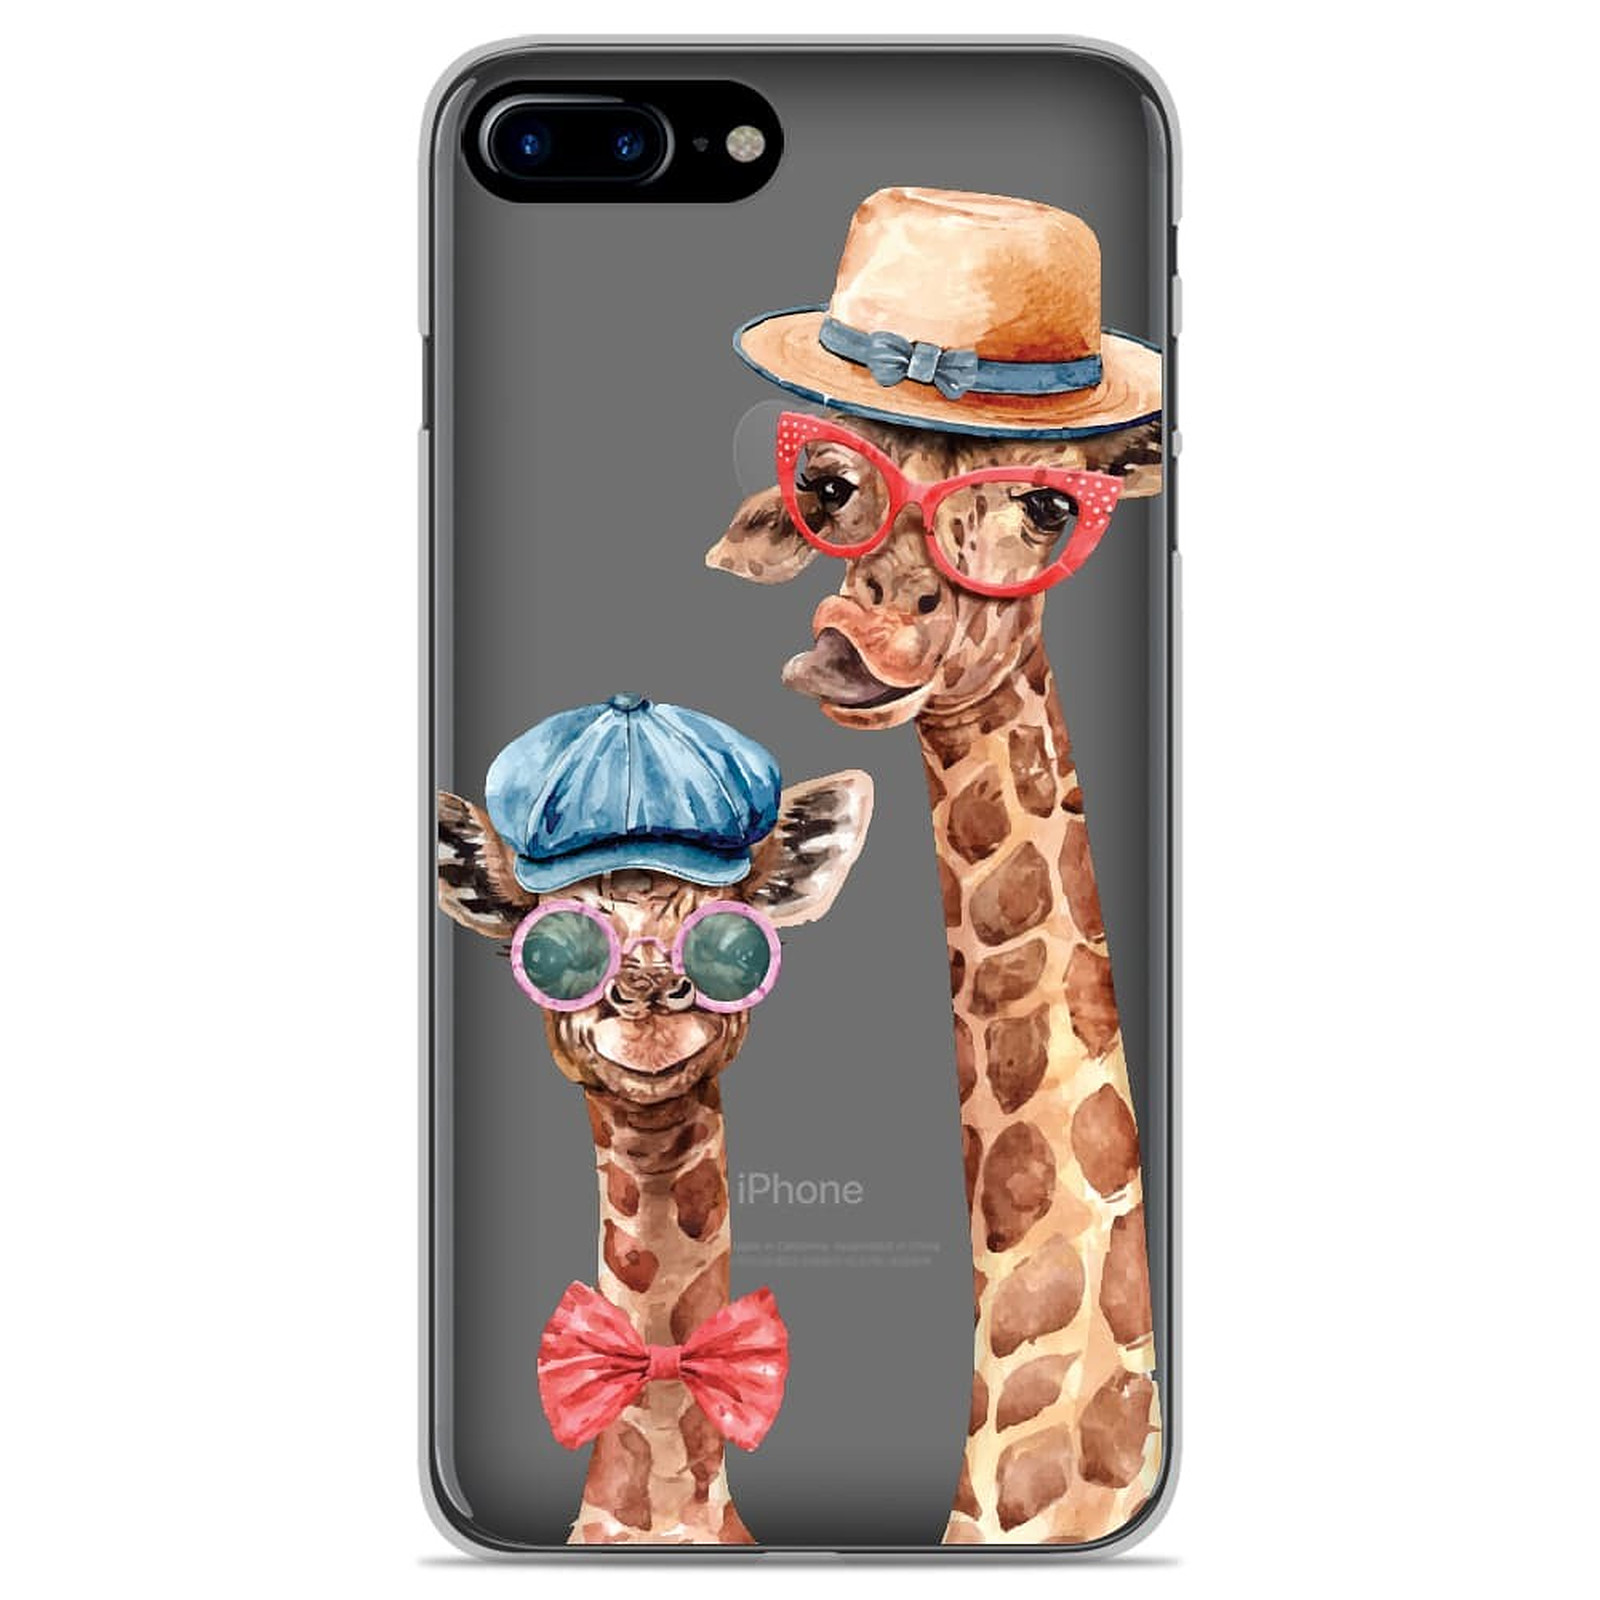 1001 Coques Coque silicone gel Apple iPhone 7 Plus motif Funny Girafe - Coque telephone 1001Coques